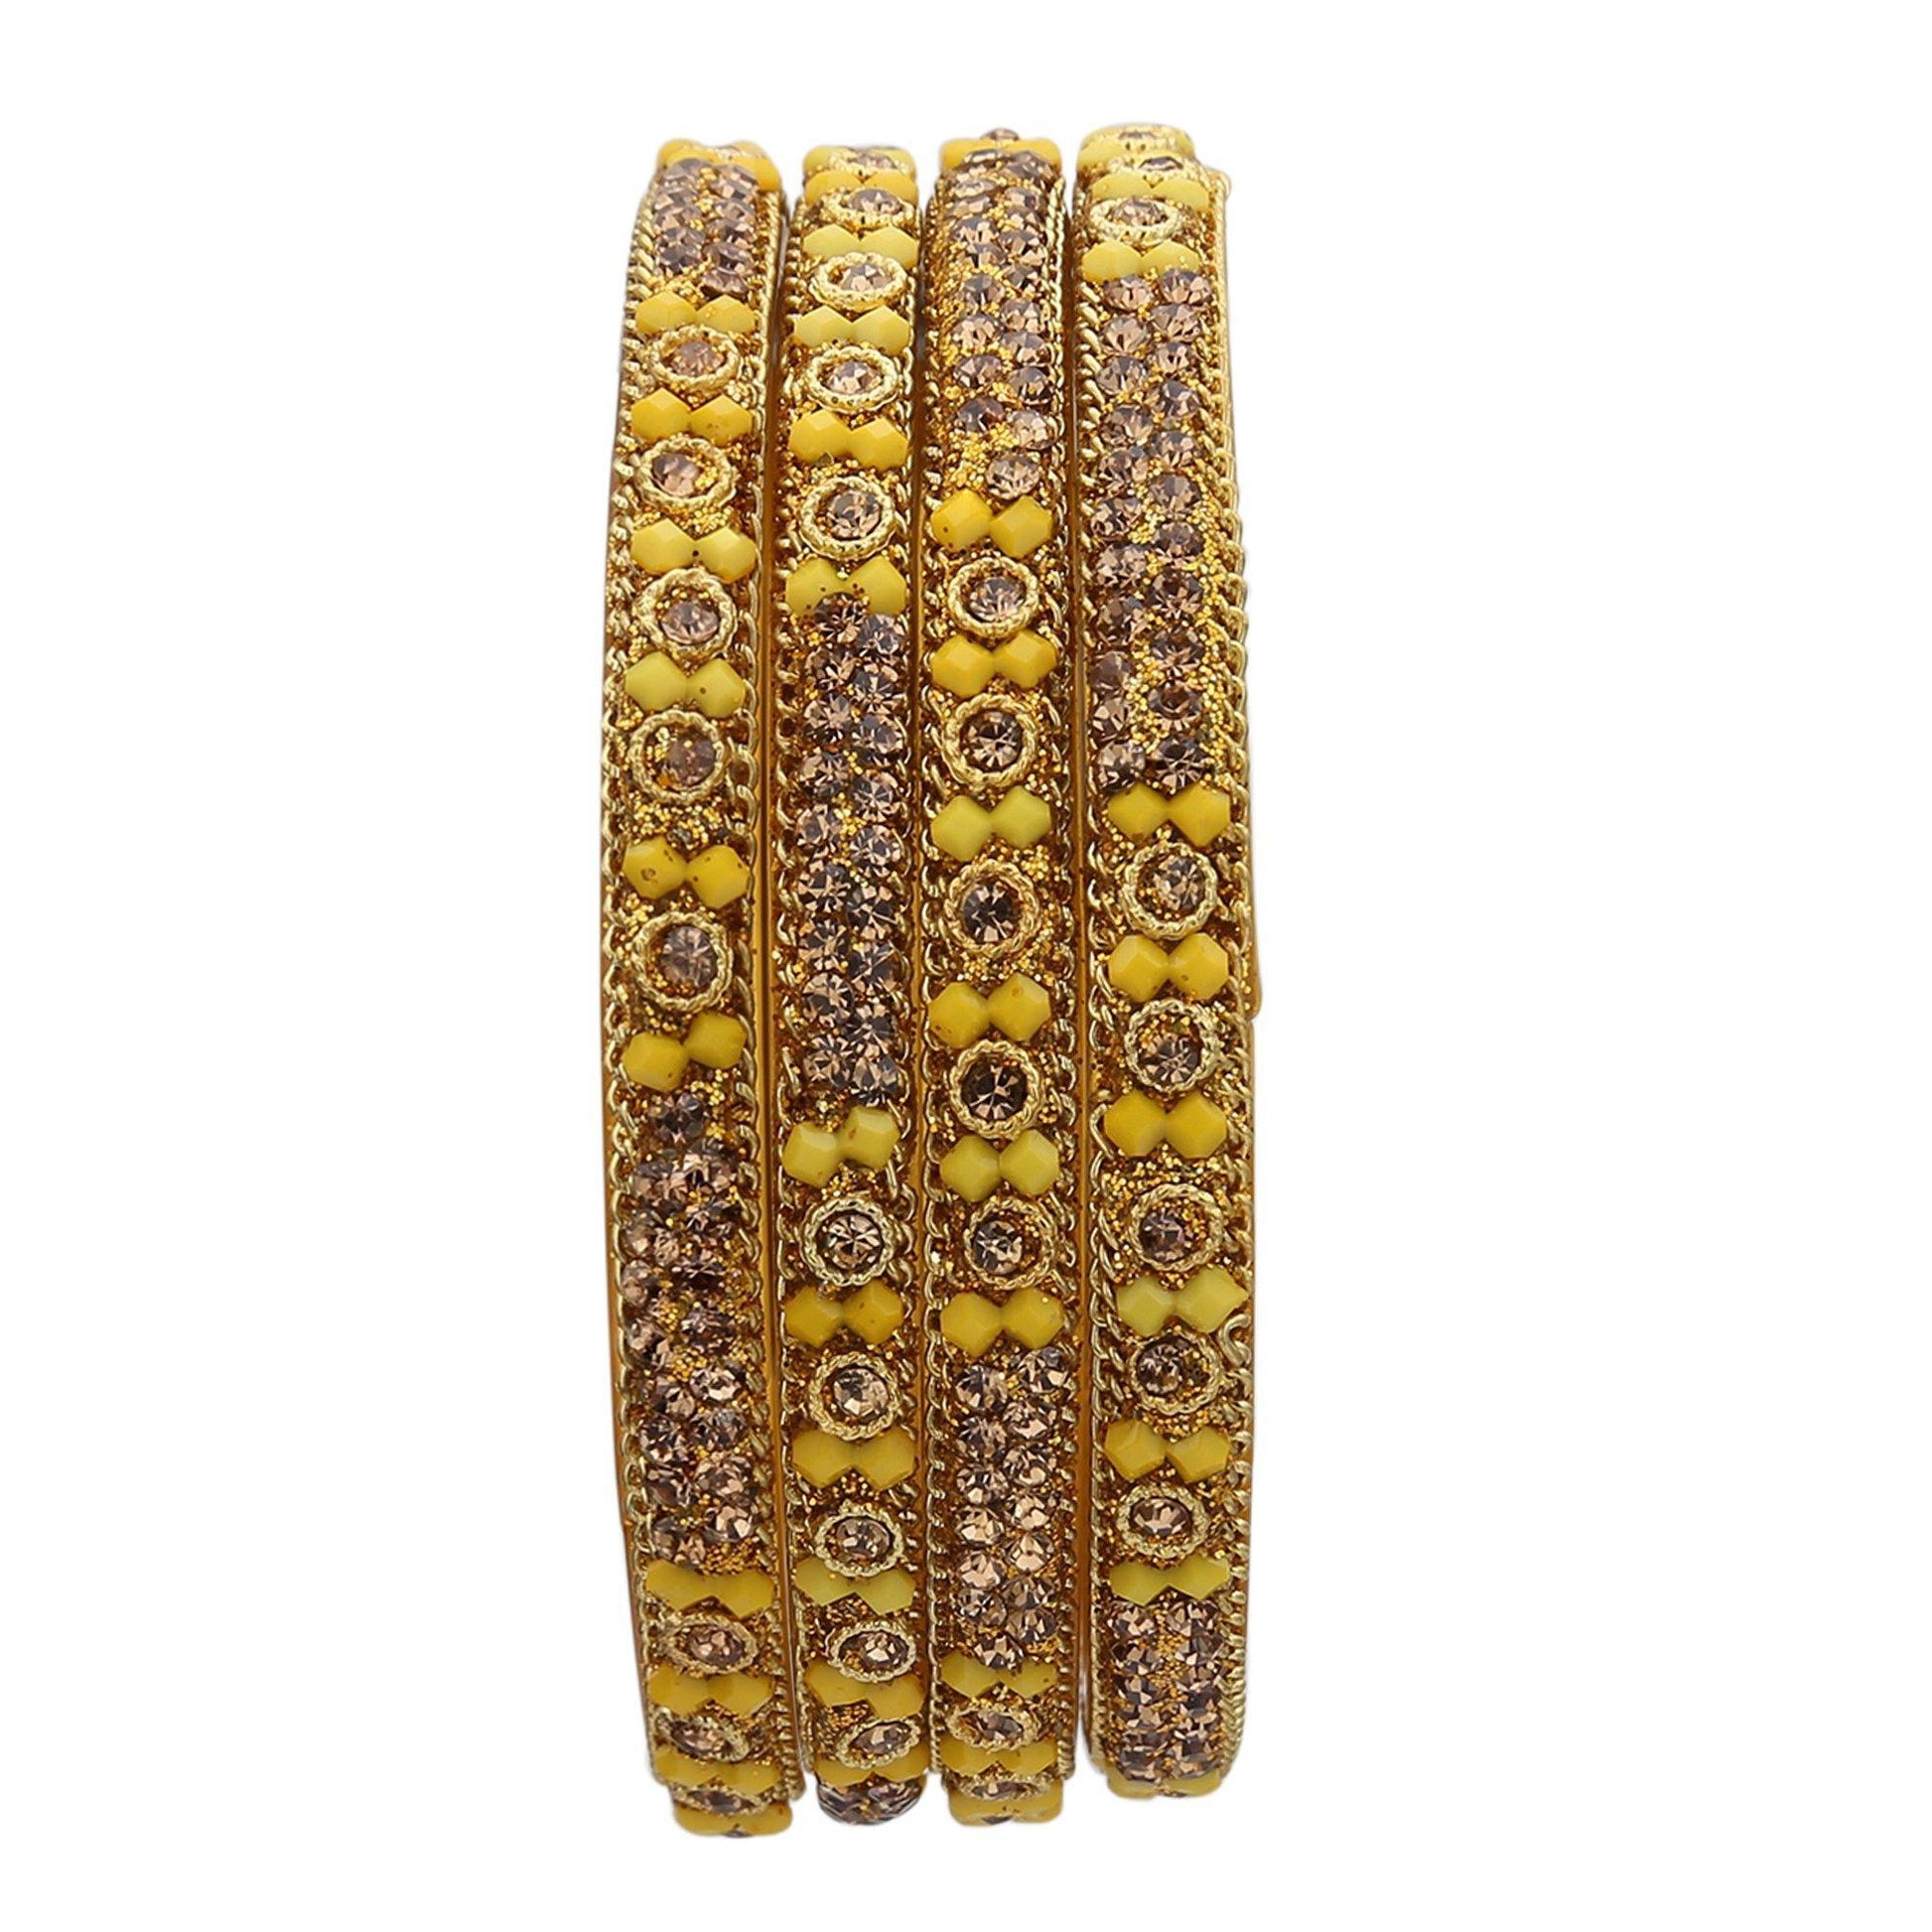 sukriti handcrafted glossy zircon crystal glass yellow bangles for women – set of 4